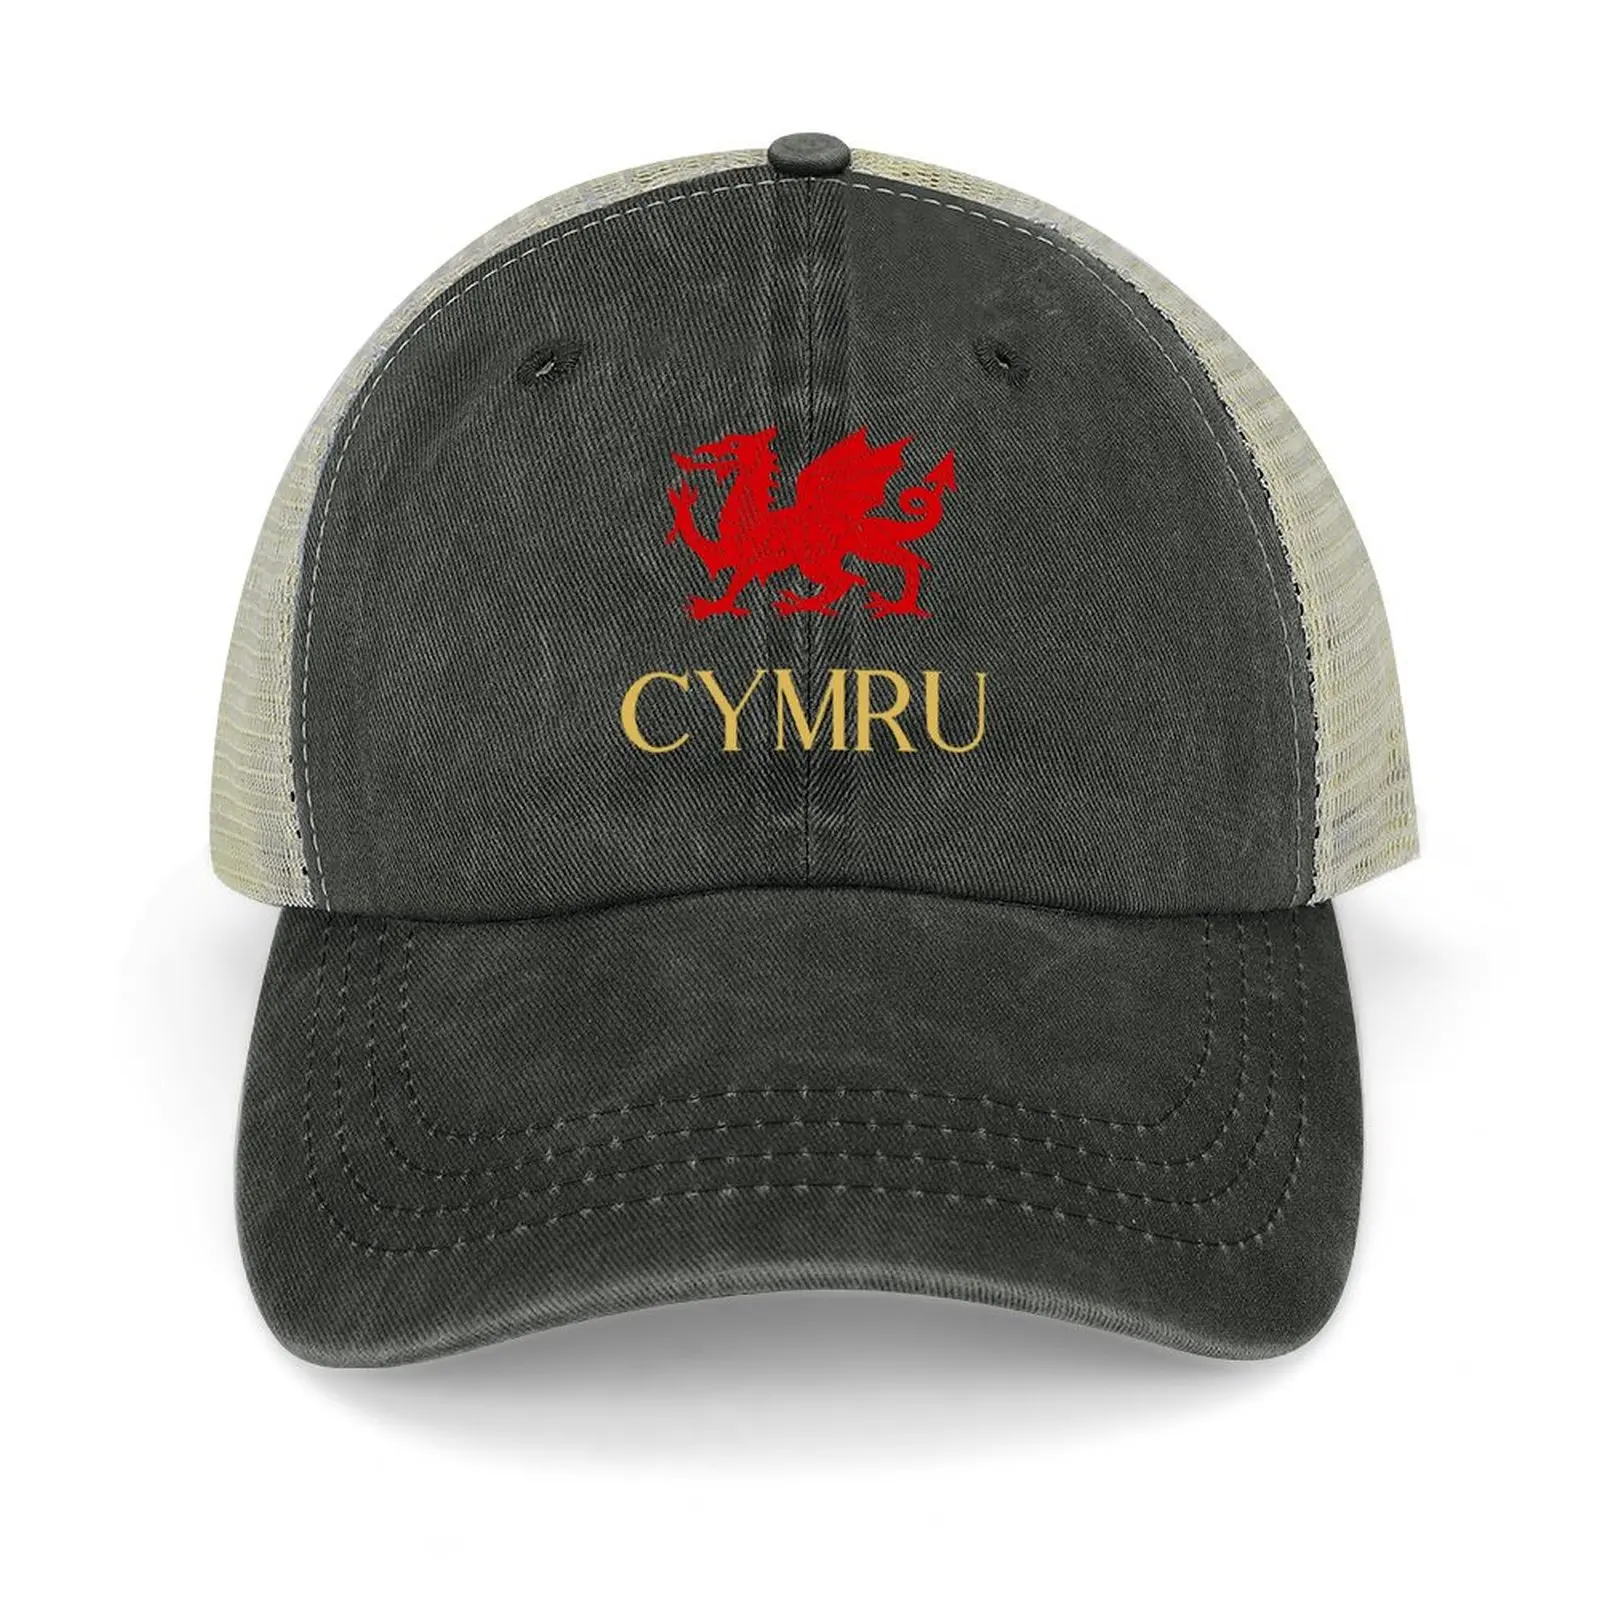 

Cymru Wales Alt Gold Cowboy Hat Luxury Cap derby hat Hat Man For The Sun Women's Beach Men's